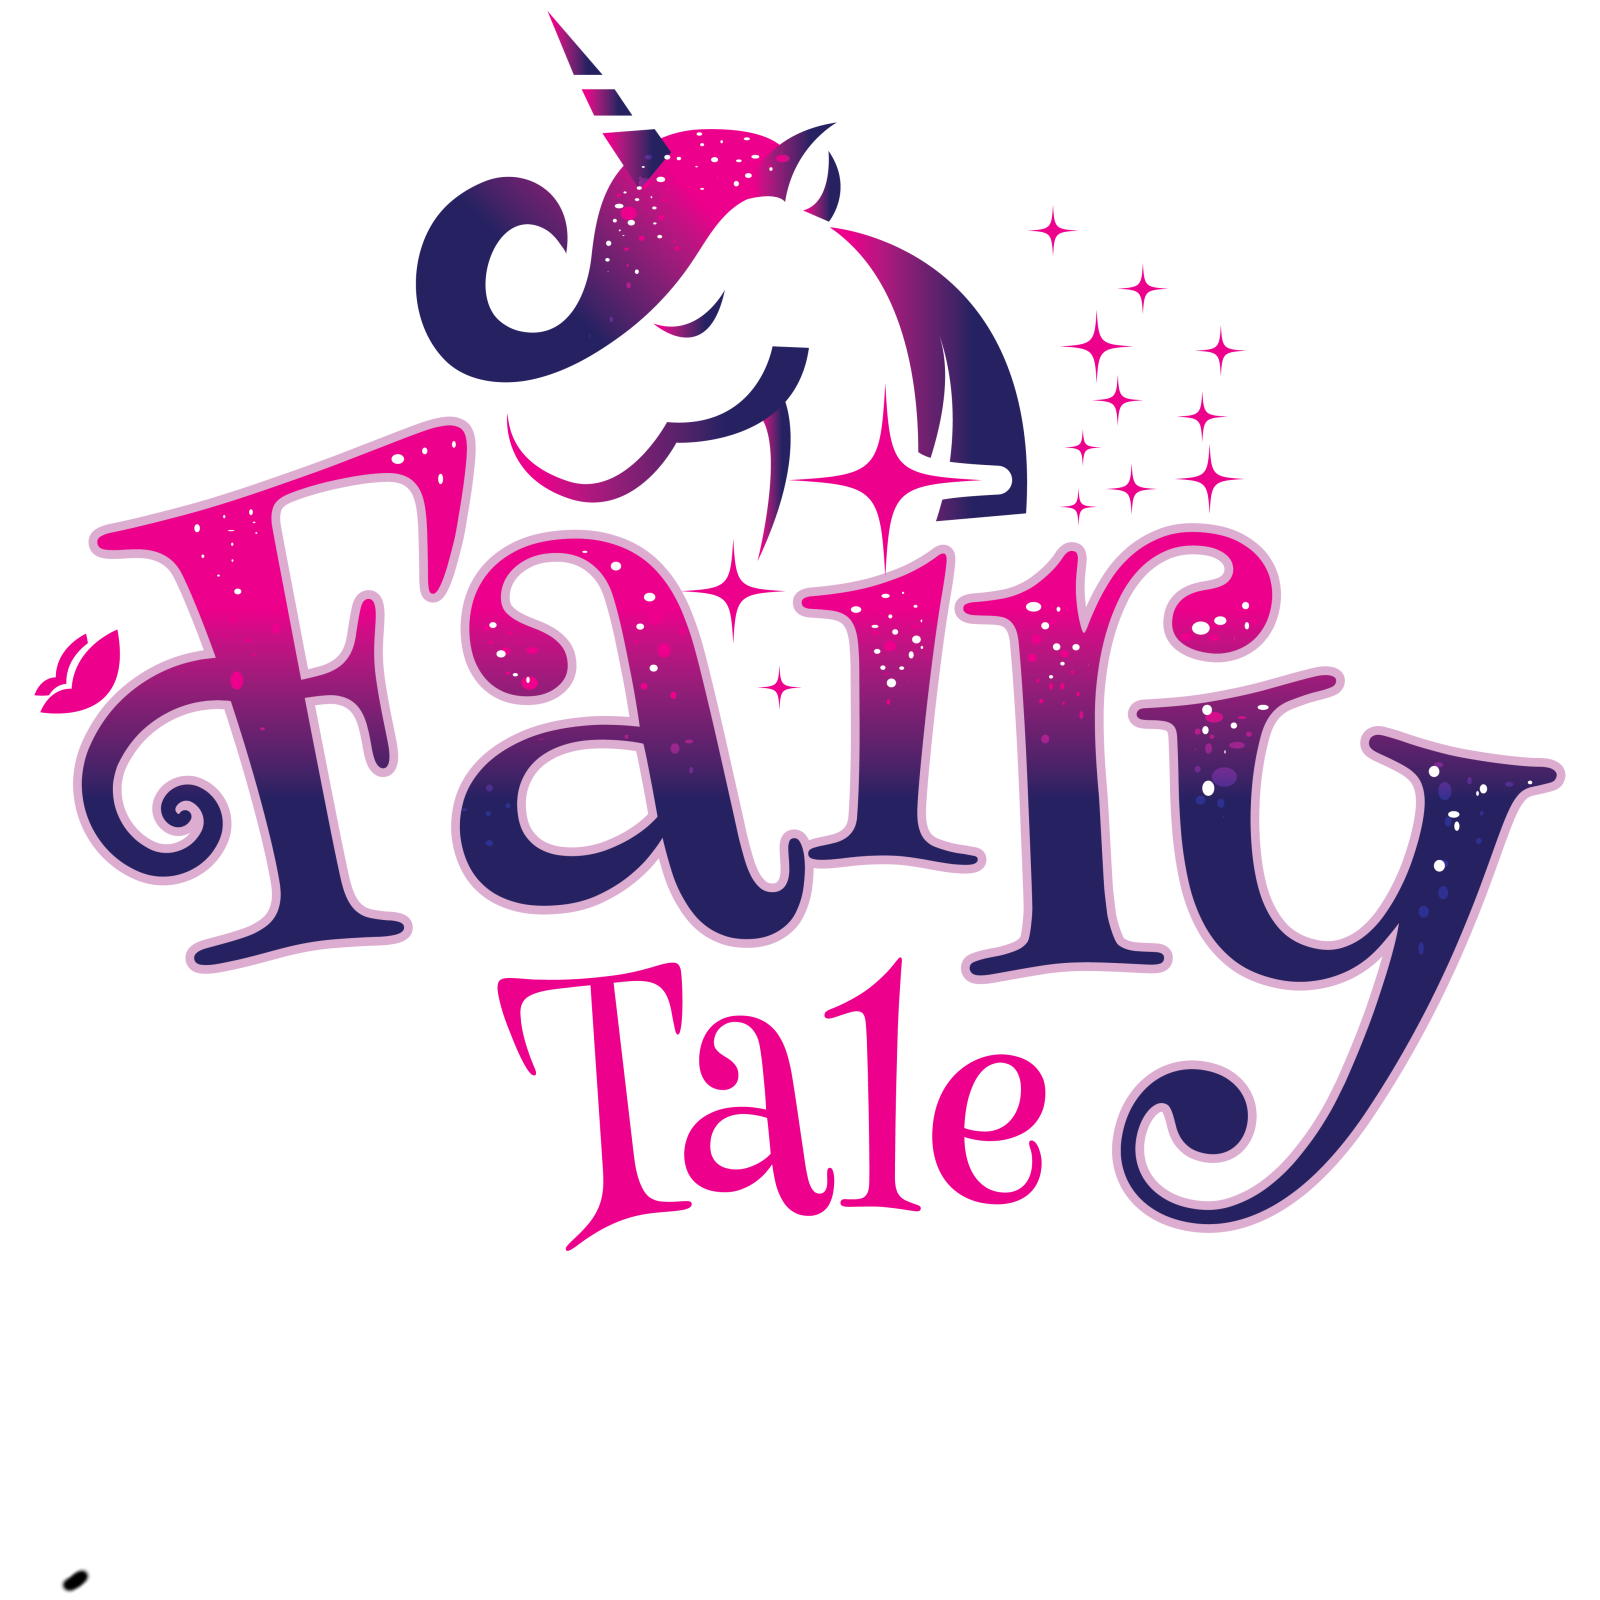 Fairy-Tale logo